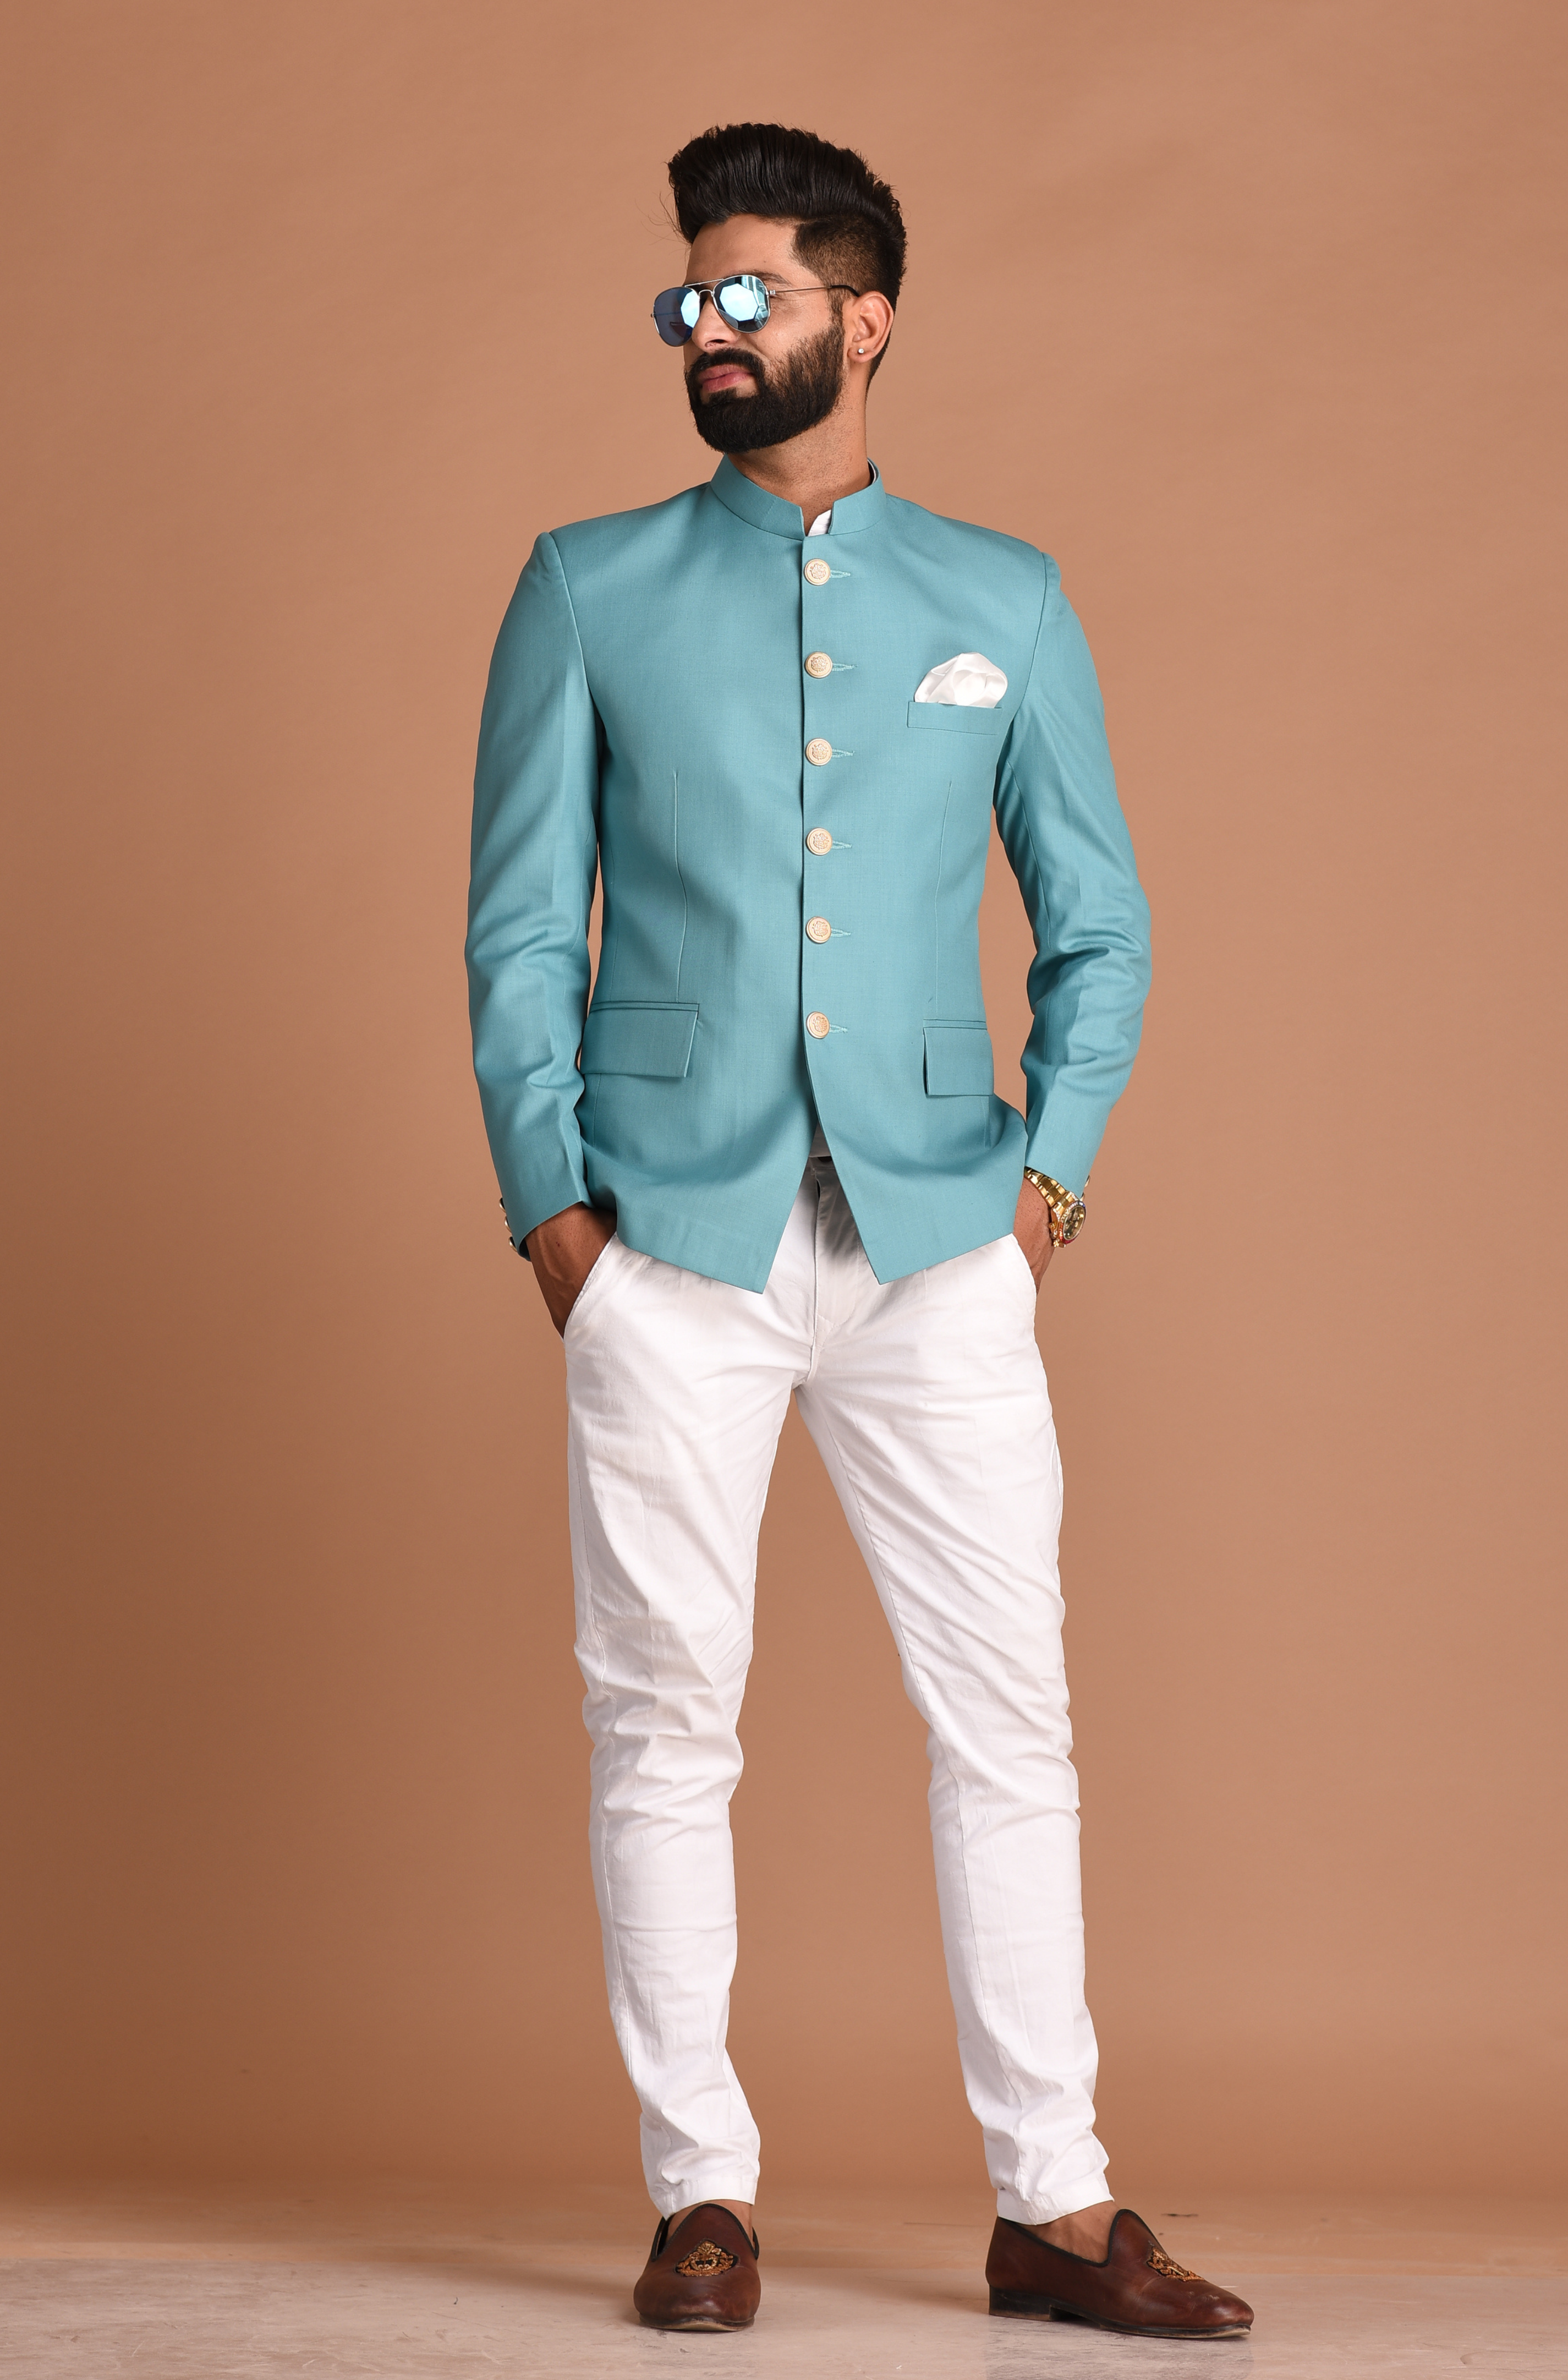 Cotton Hunting modi jacket rajputana stylish at Rs 1200/piece in Jodhpur |  ID: 2848972489197